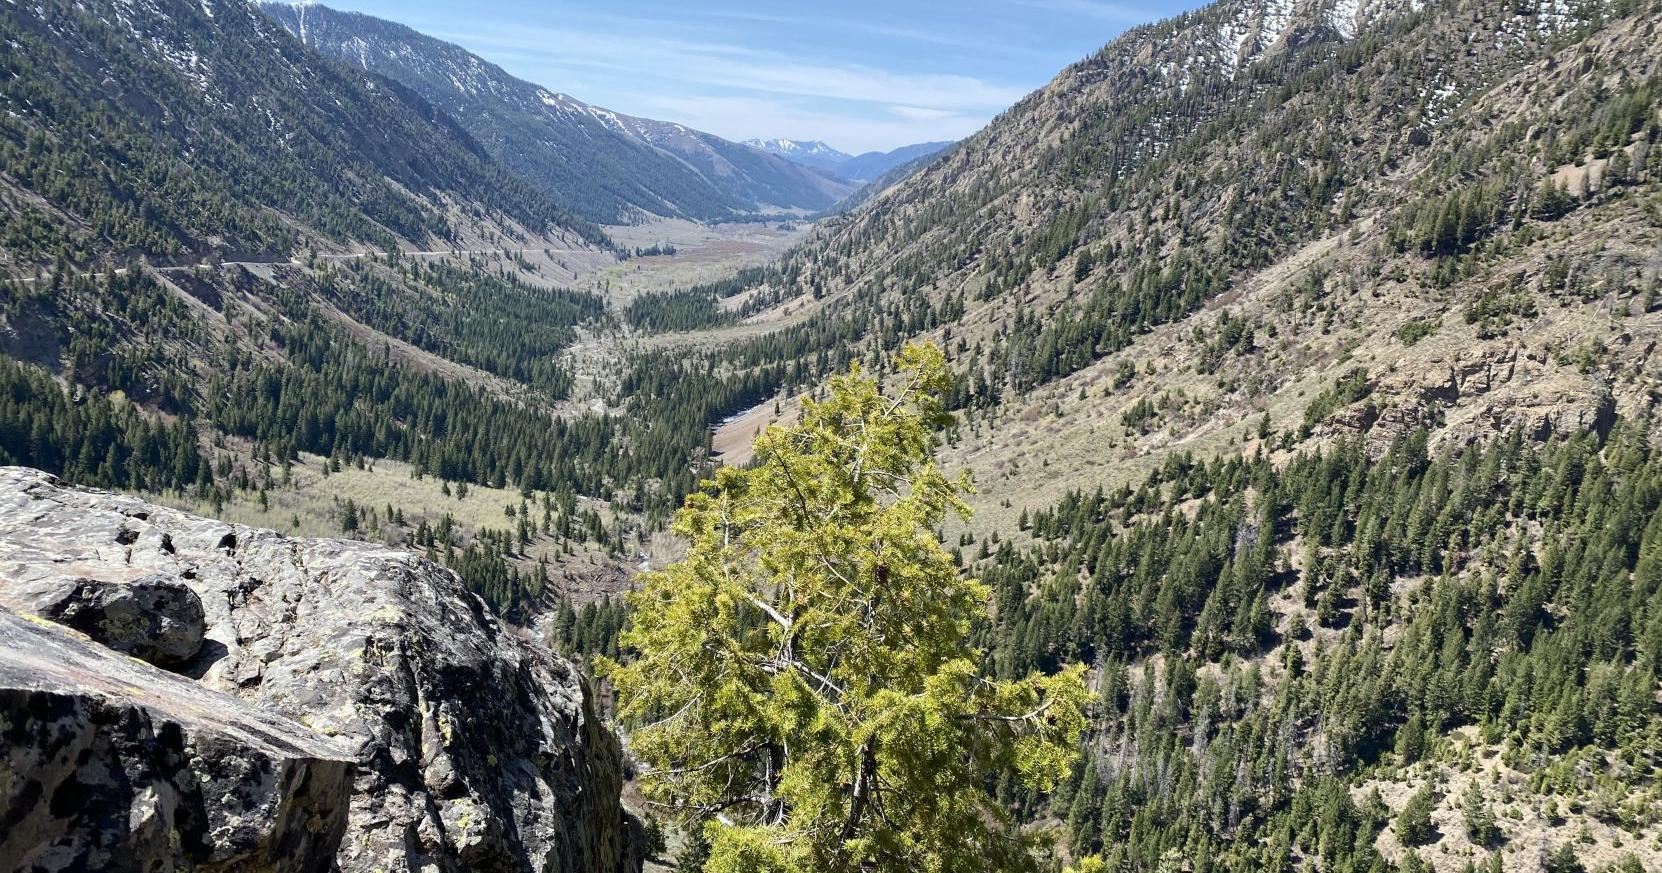 Trail Creek Summit remains closed